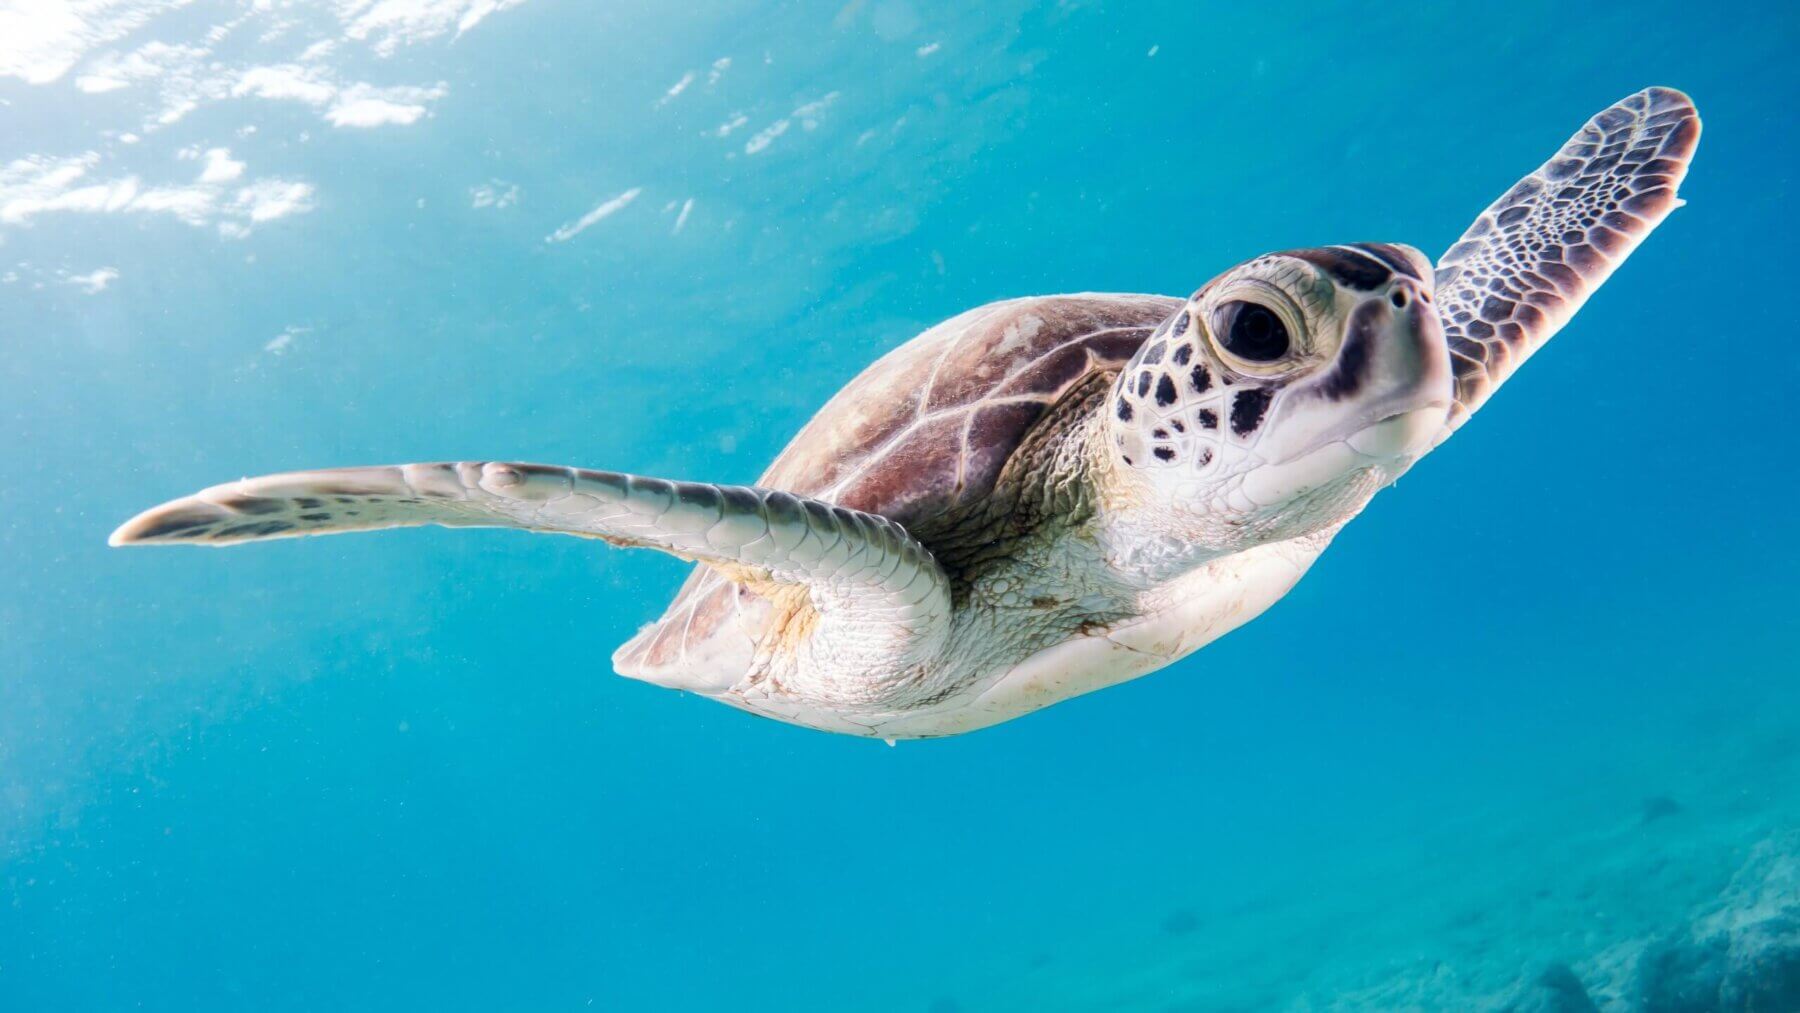 Turtle in The Sea